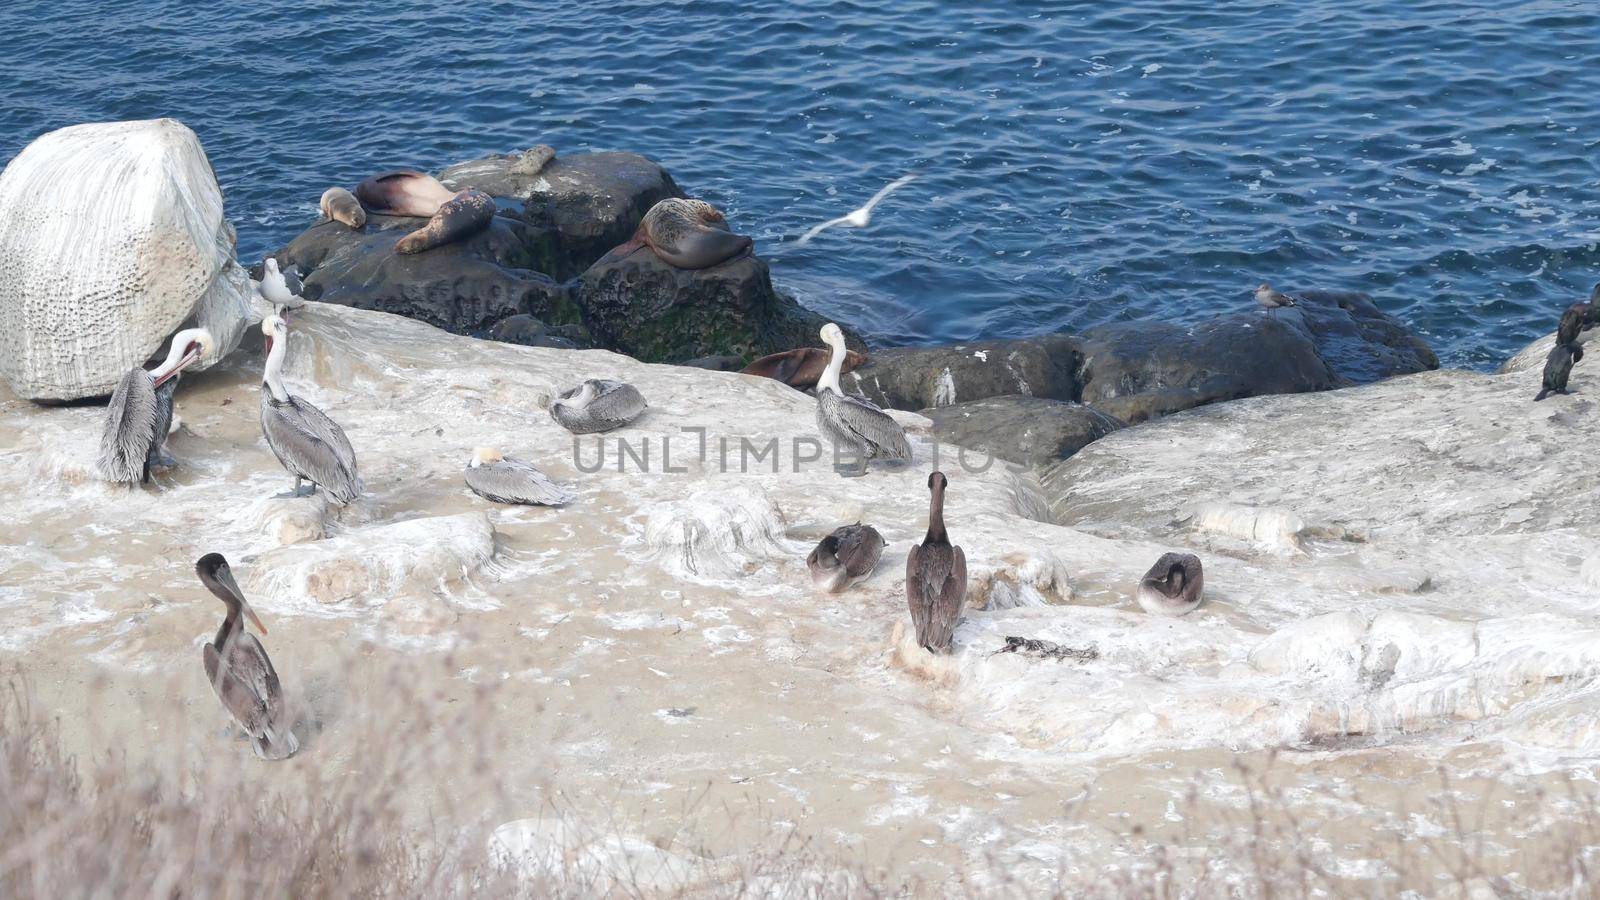 Pelican flock, colony of bird, seal or sea lion, rock by ocean water, California by DogoraSun